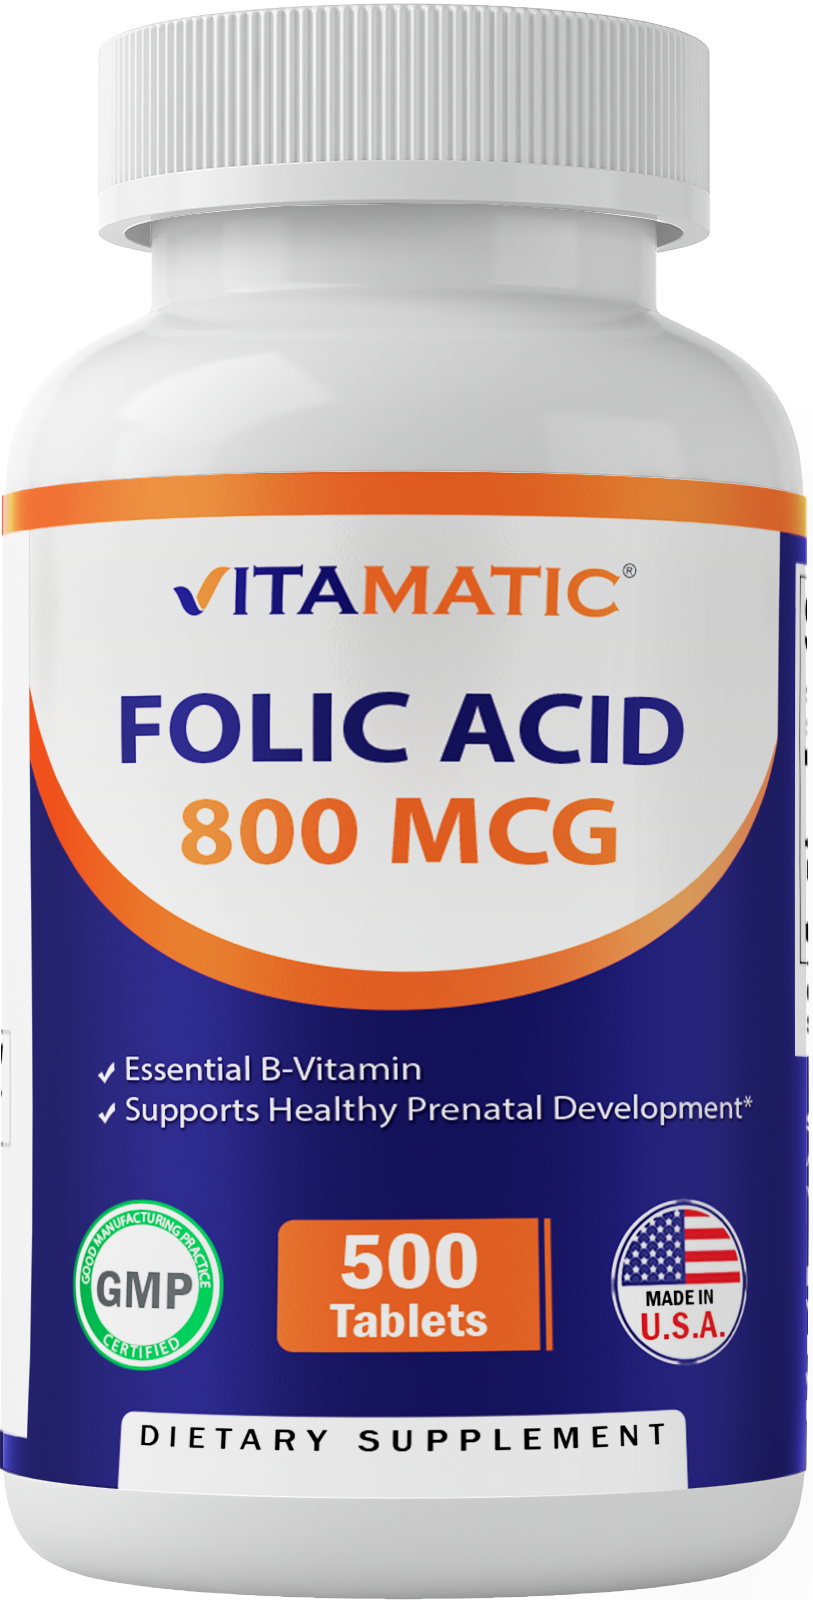 Folic Acid 800 mcg 500 Vegetarian Tablets